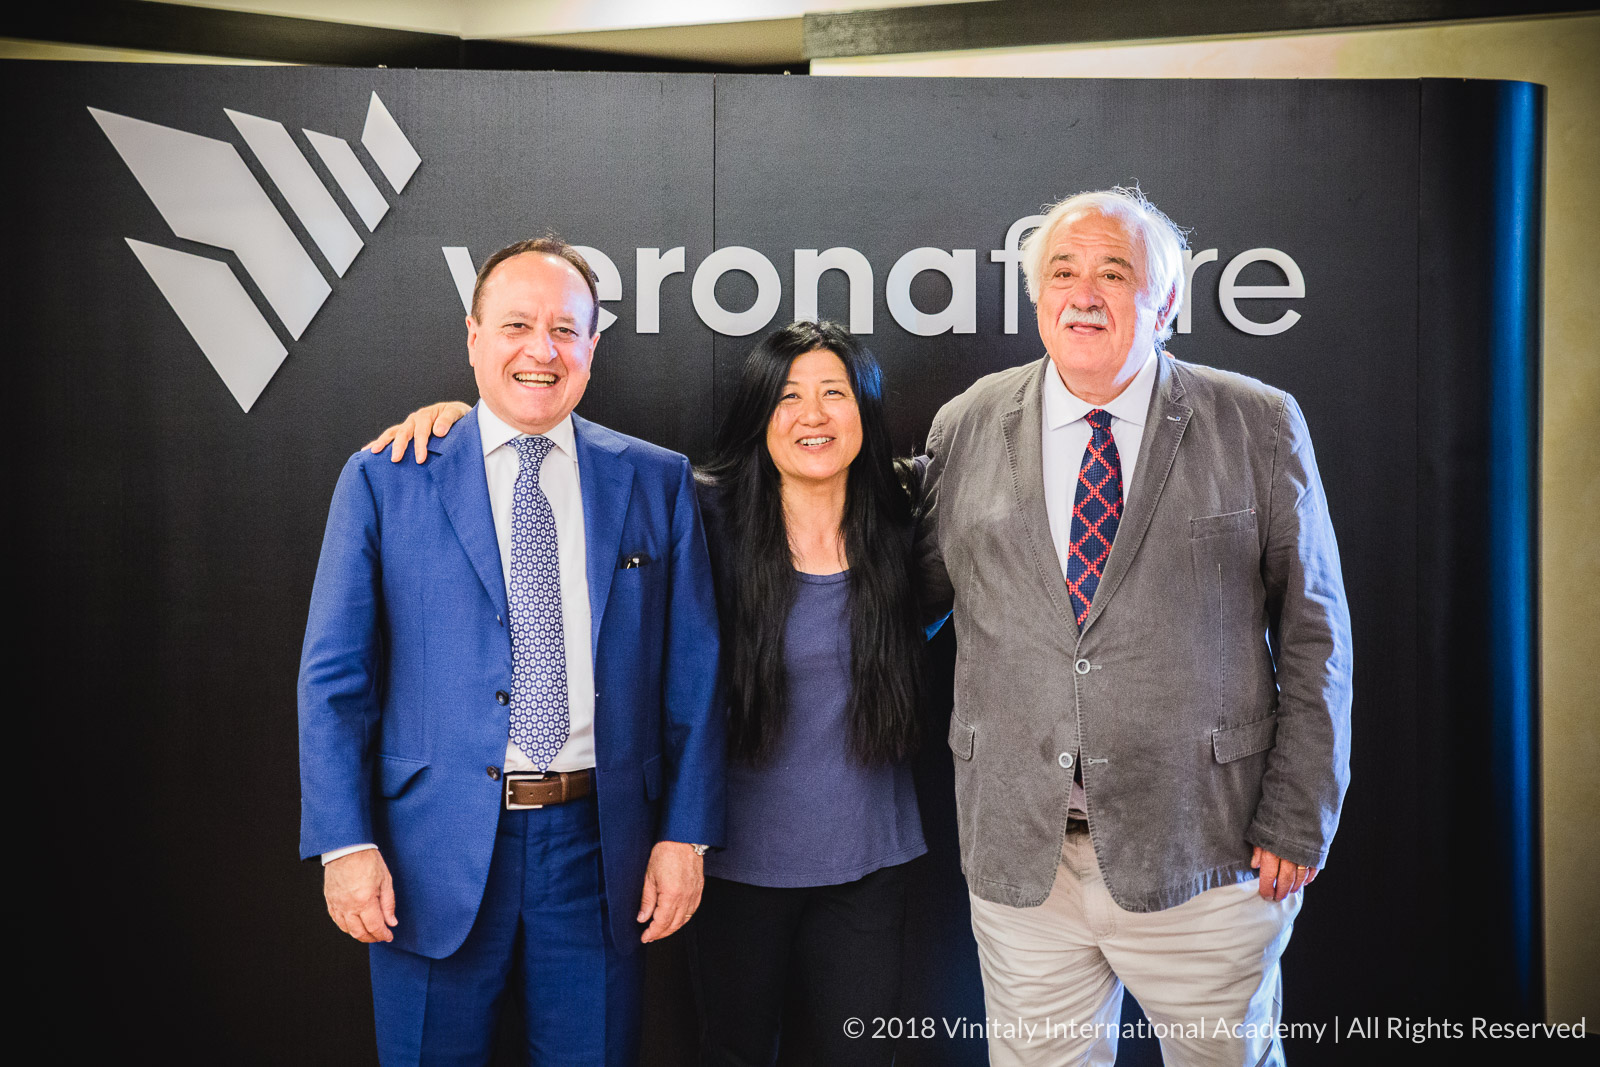 Left to right: Giovanni Mantovani (CEO of Veronafiere); Stevie Kim (Managing Director of Vinitaly International); Attilio Scienza (newly-appointed Chief Scientist of the Vinitaly International Academy